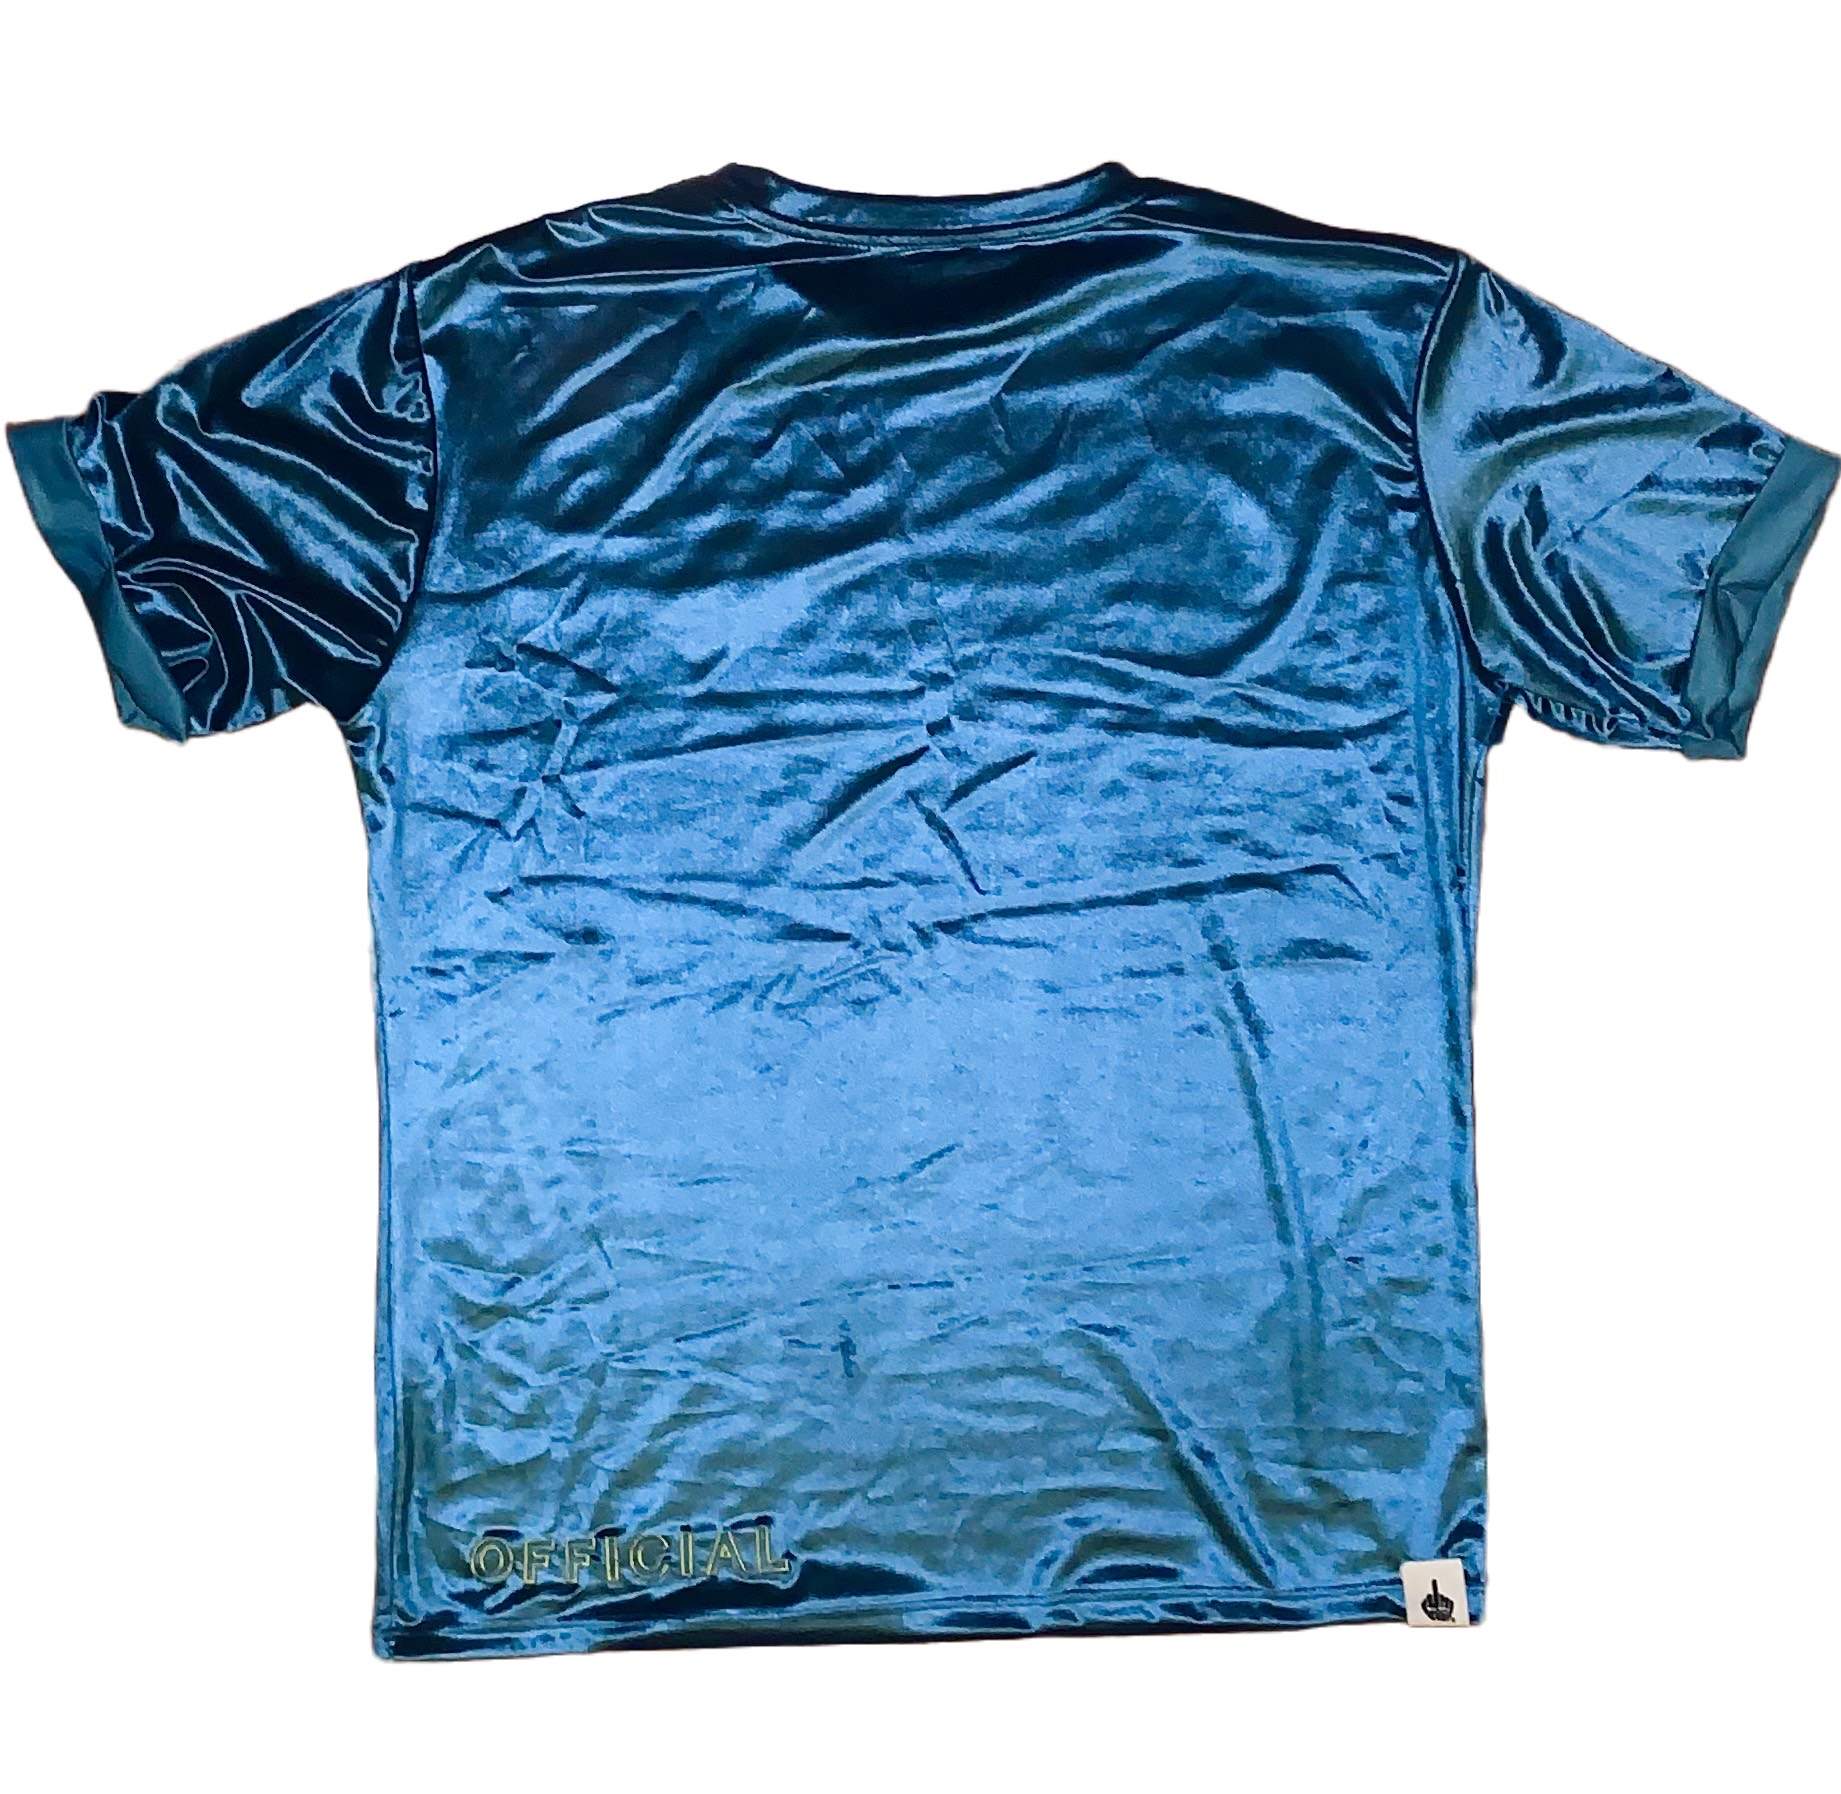 WaterCool completino (maglietta + pantaloncino)